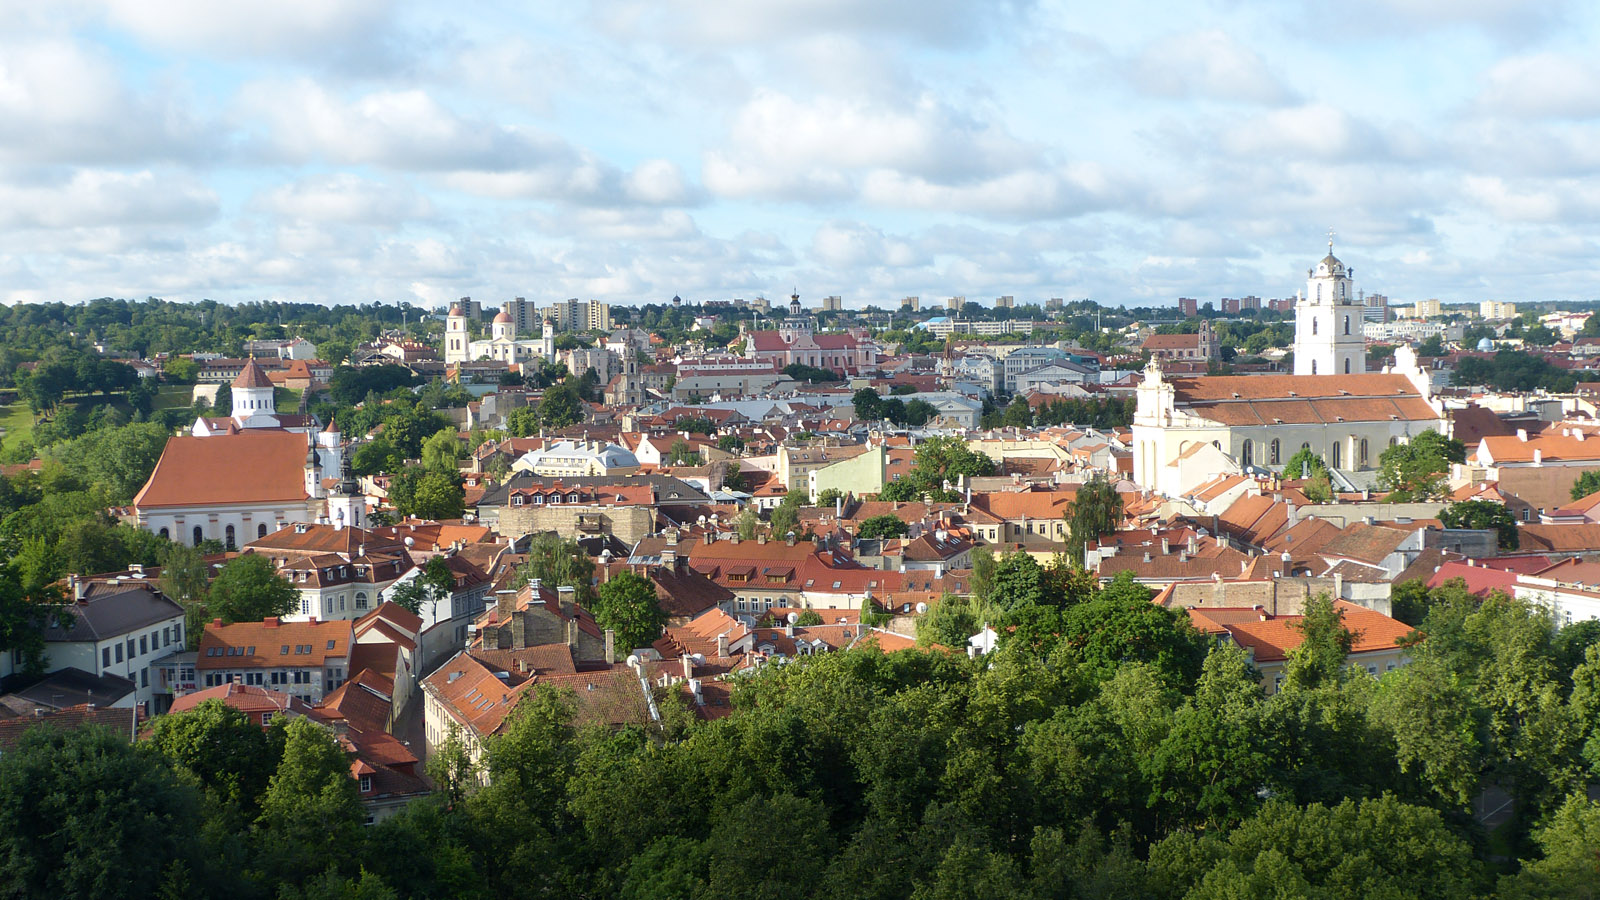 City skyline, Vilnius, Lithuania